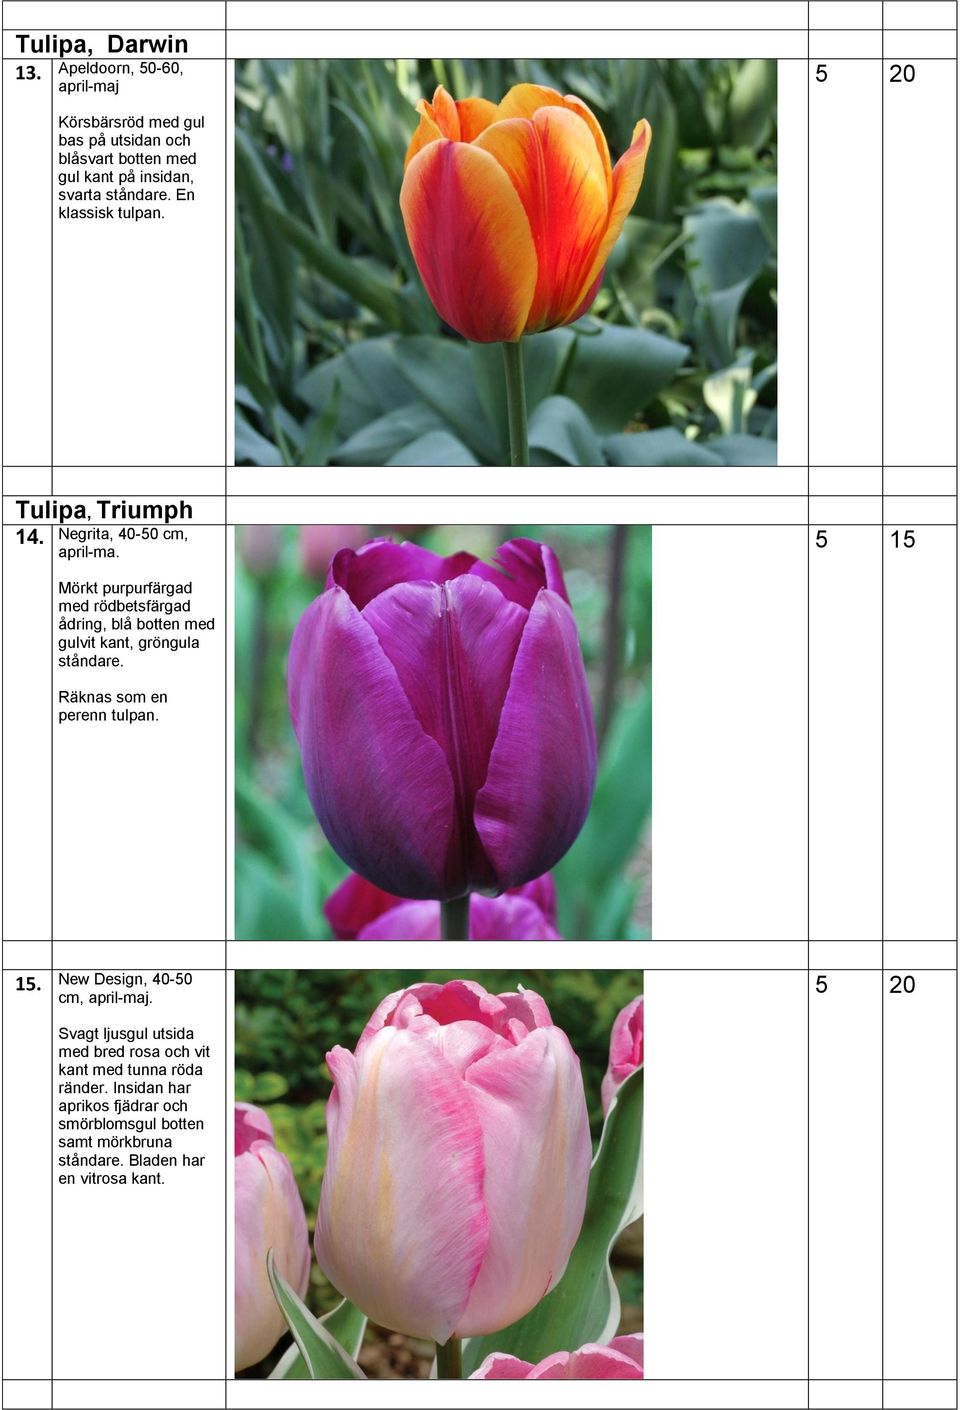 En klassisk tulpan. Tulipa, Triumph 14. Negrita, 40-50 cm, april-ma.